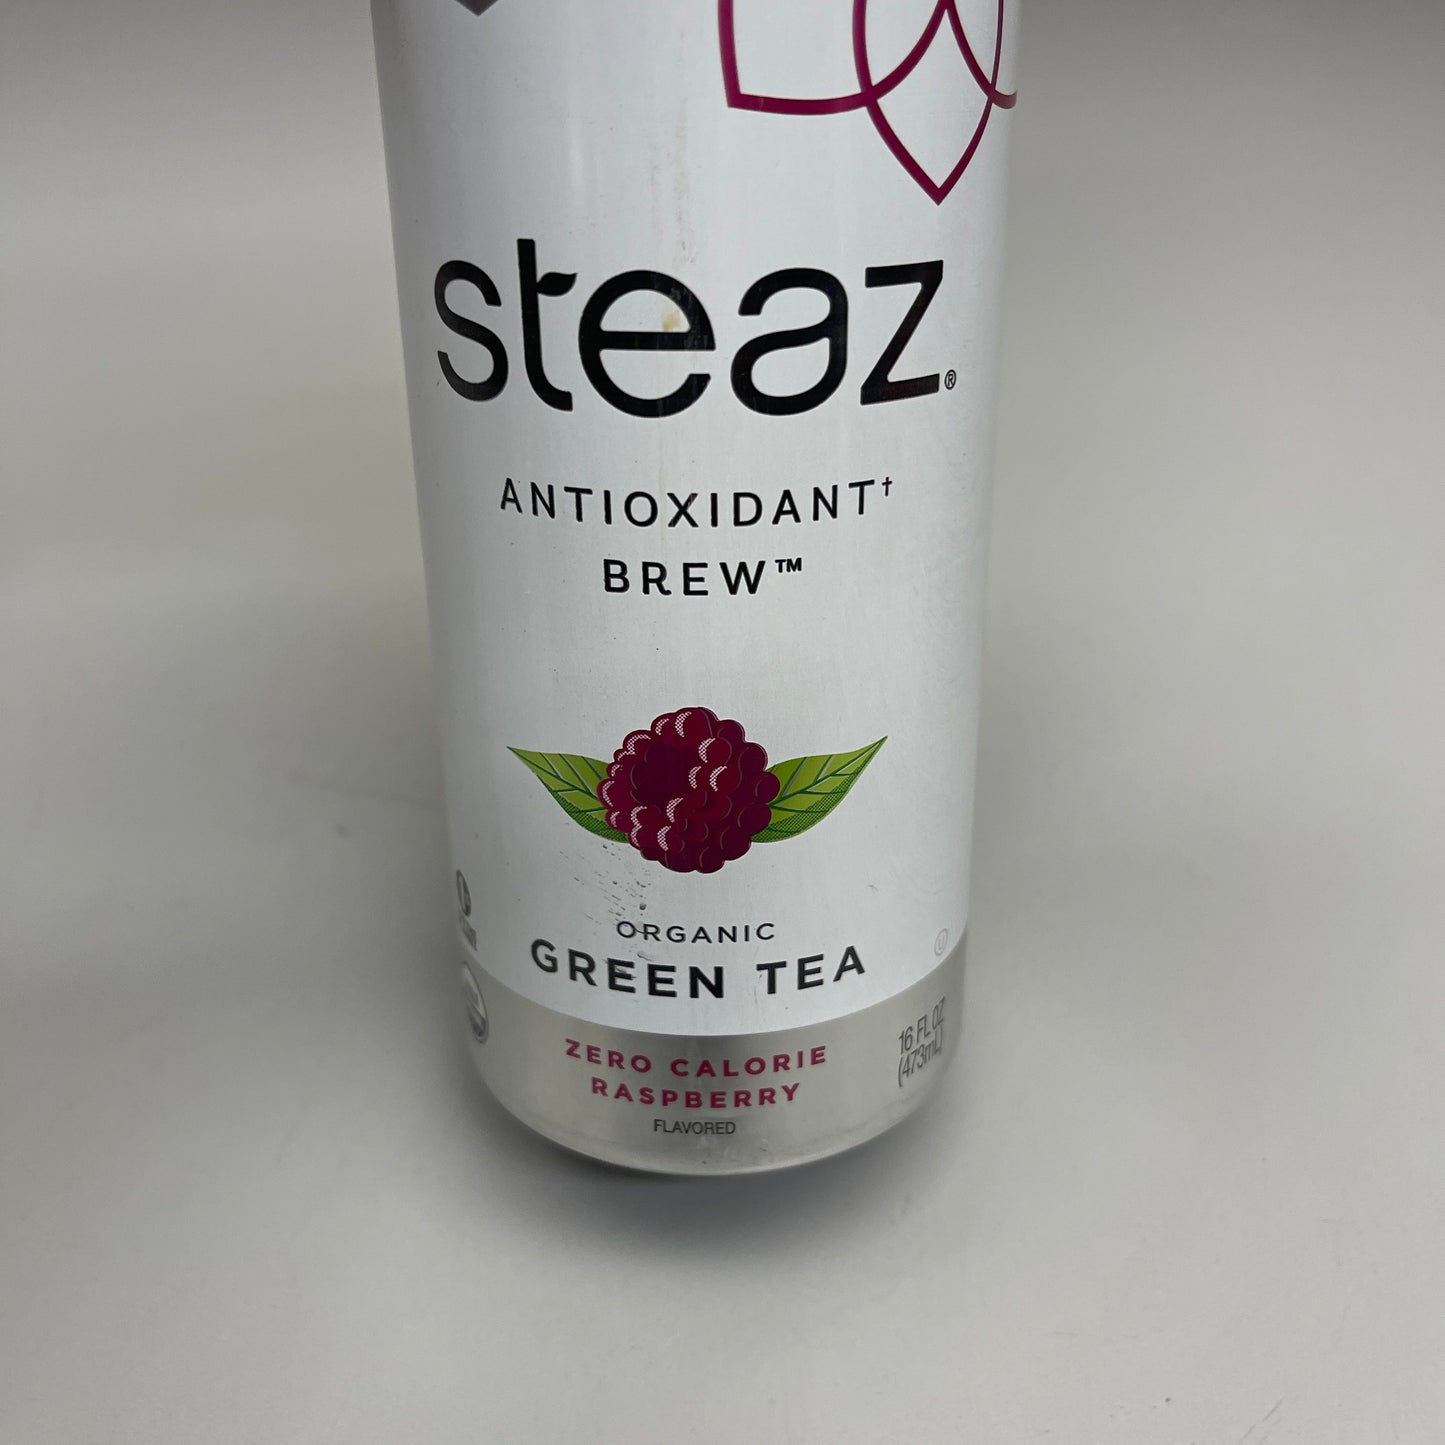 ZA@ STEAZ (12 PACK) Antioxidant Brew Organic Green Tea Raspberry 16 fl oz Zero Calorie (07/25) Distressed Packaging